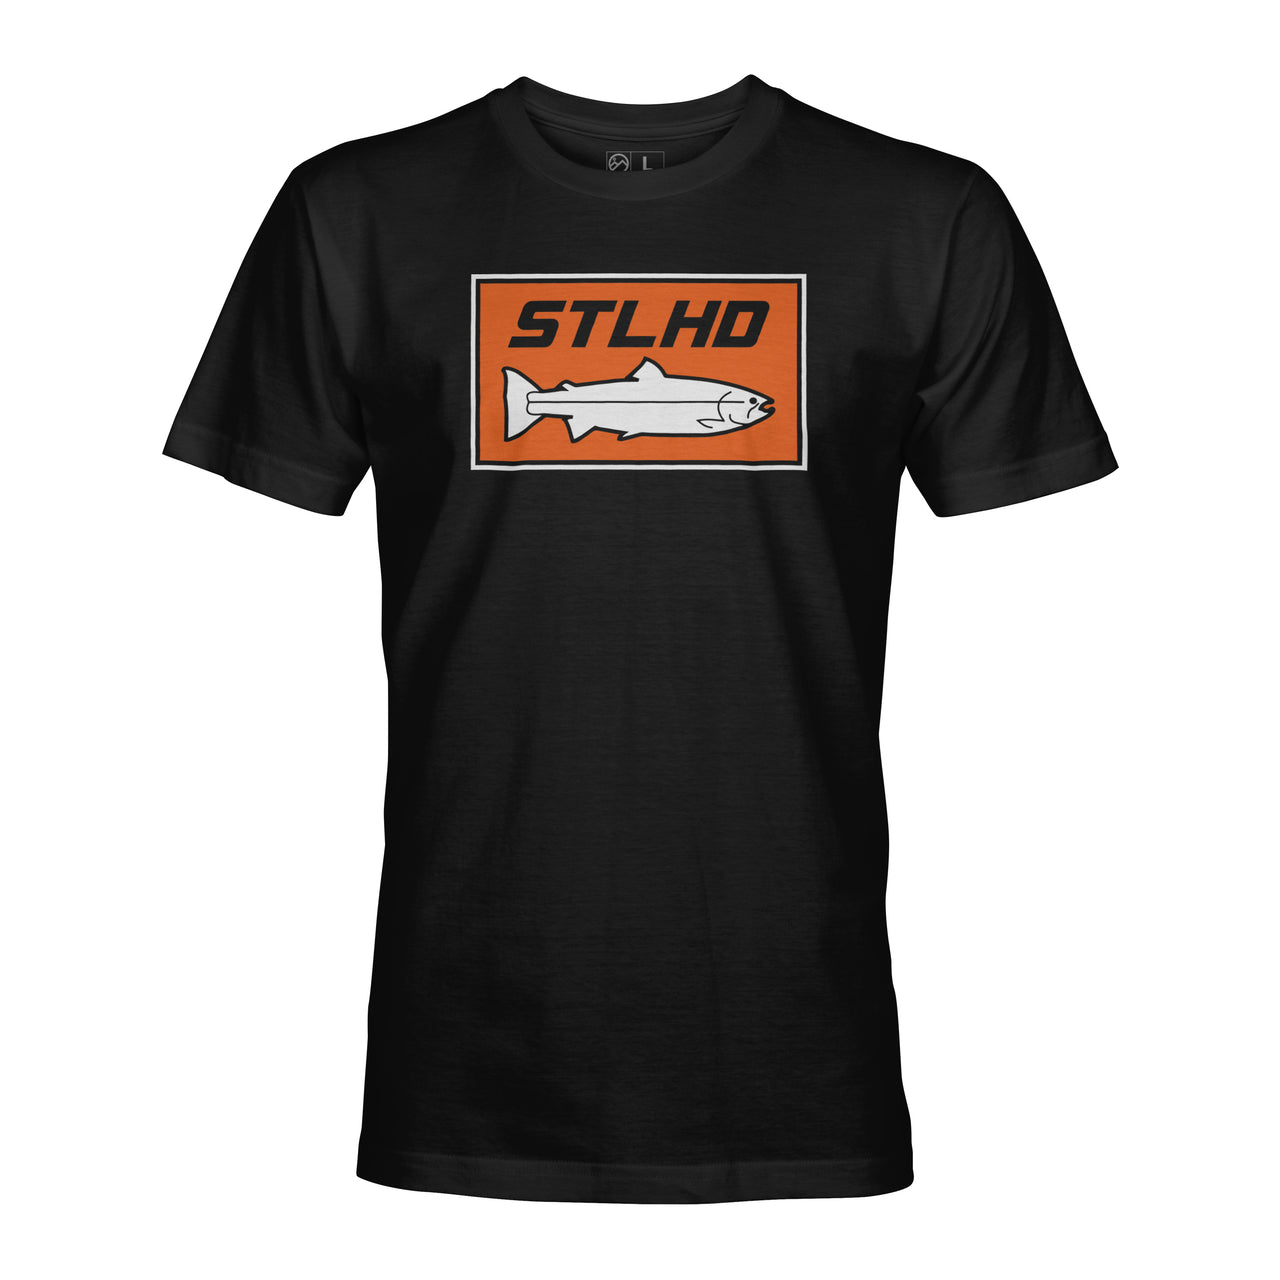 STLHD Men's Standard Logo Charcoal T-Shirt, MD